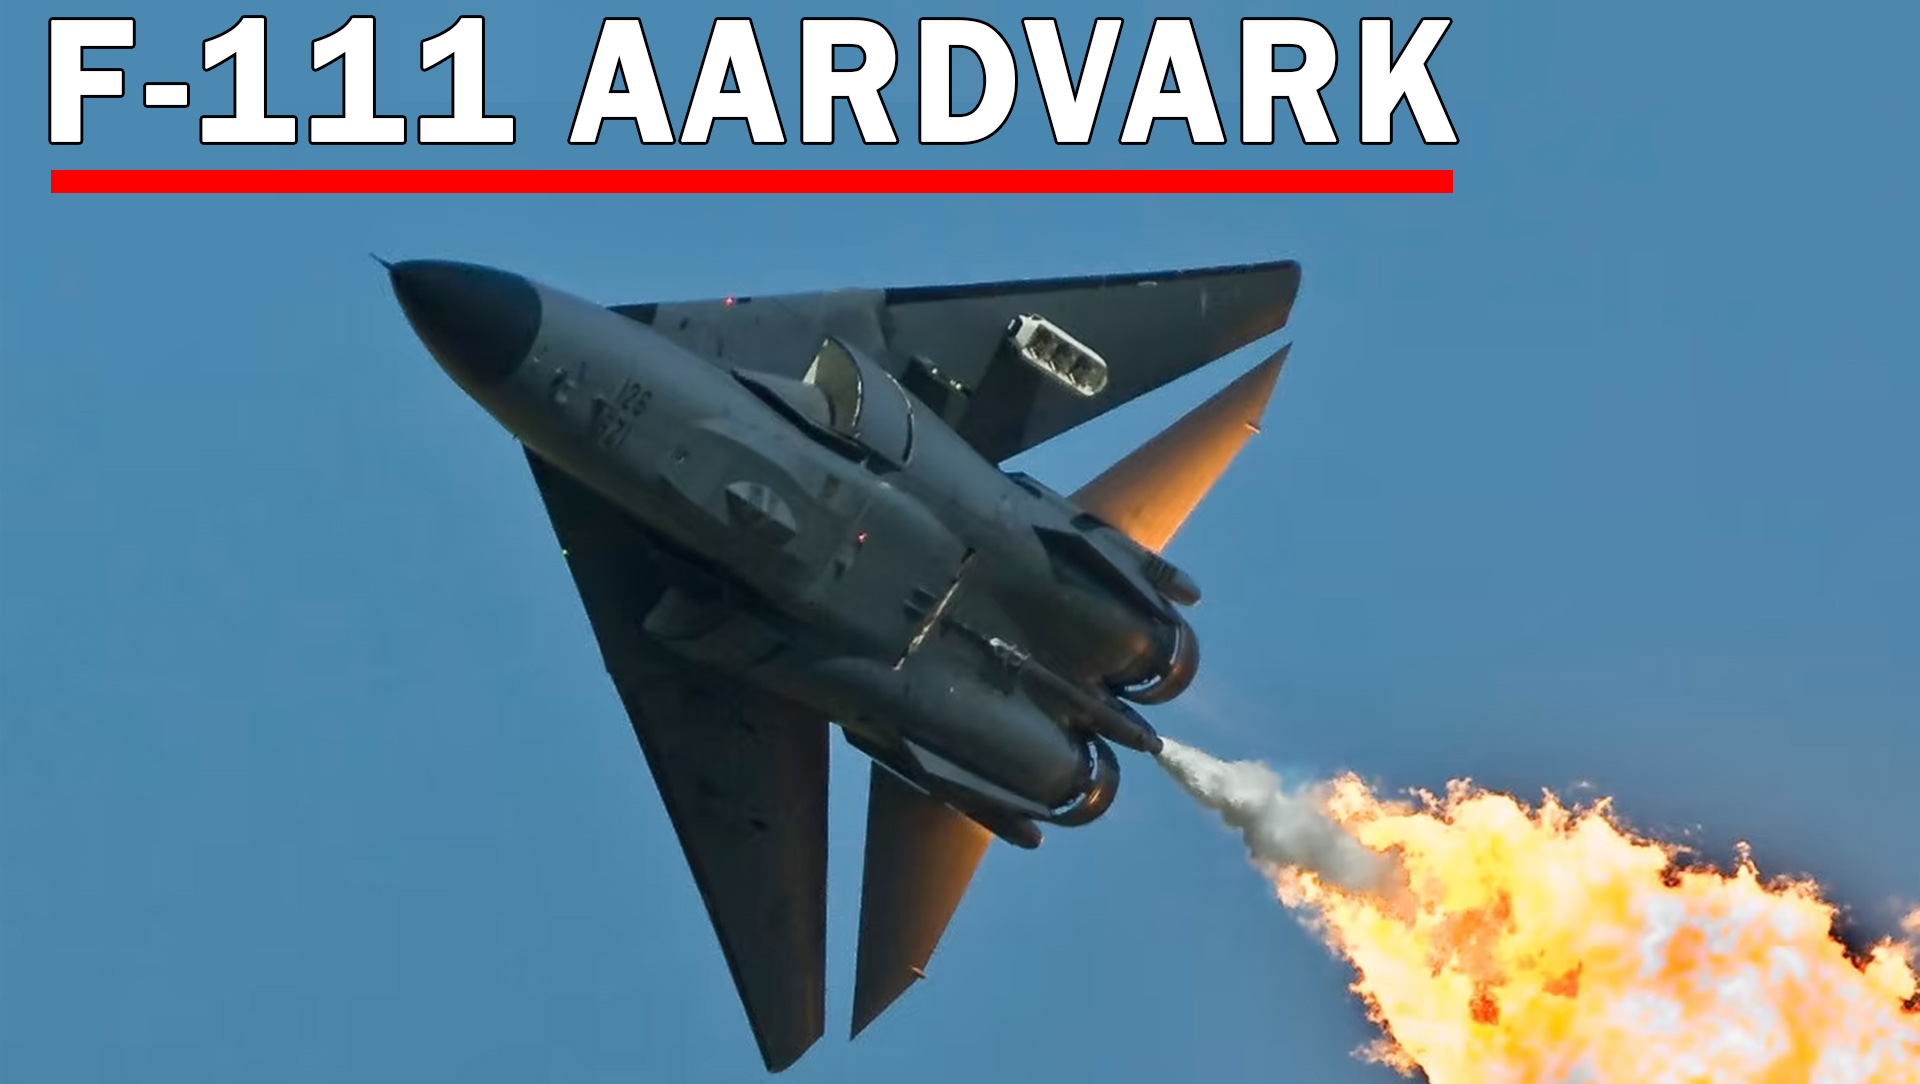 F-111 Aardvark, The Aircraft that Defined an Era - Curious Droid